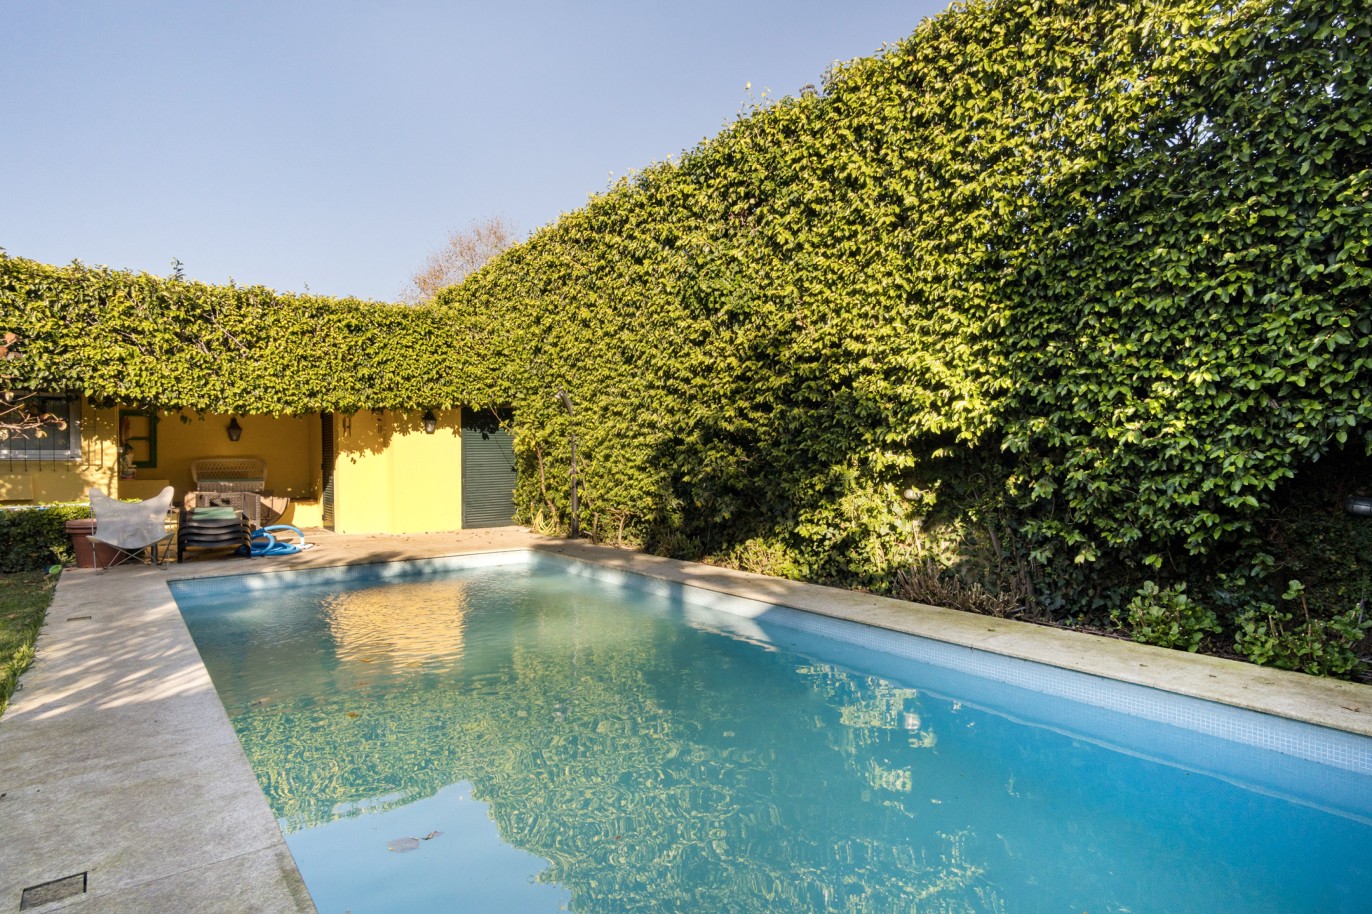 4 bedroom villa with garden and pool, for sale, Ramalde, Porto, Portugal_213957